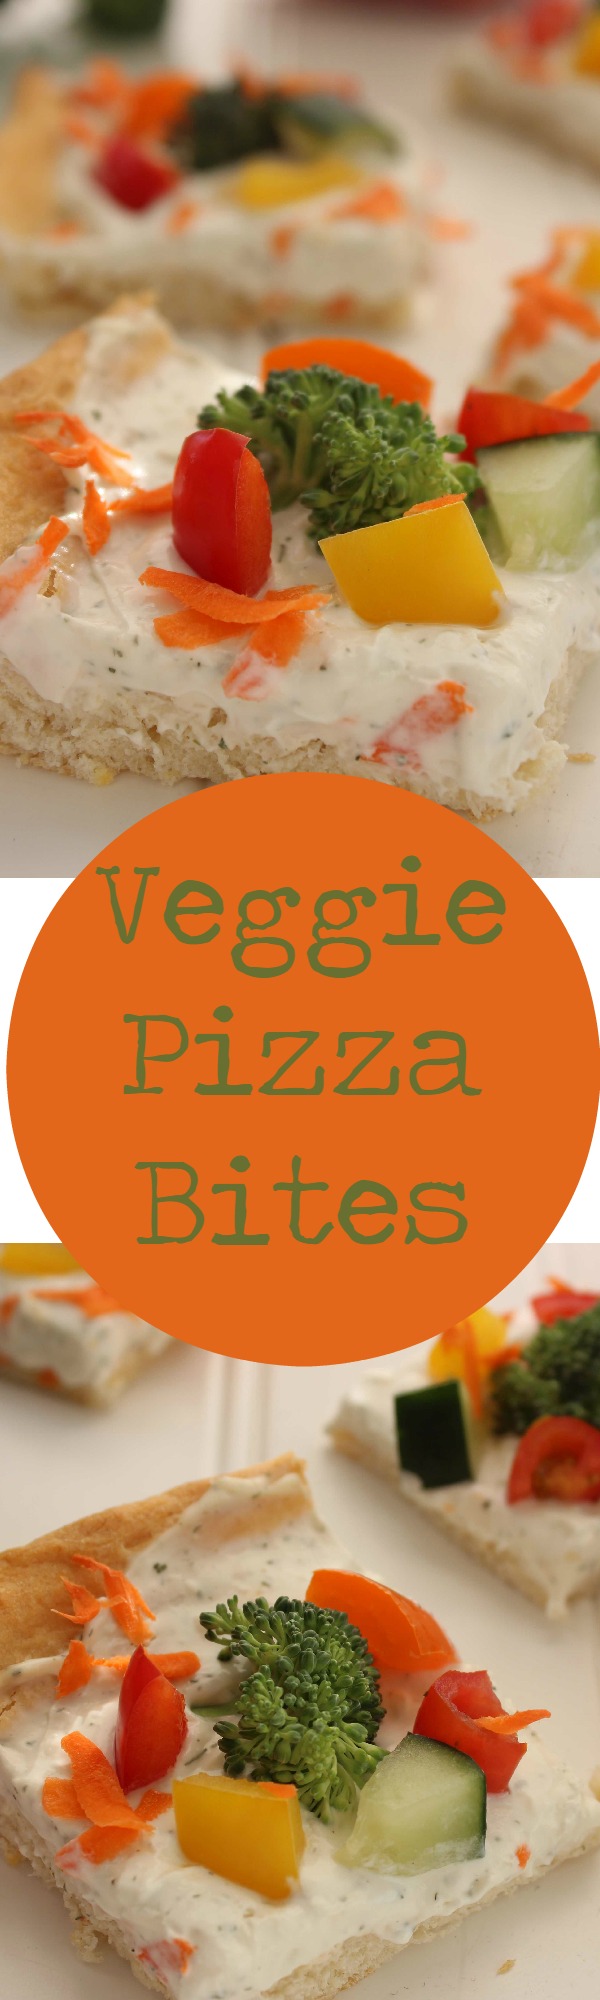 Veggie Pizza Bites - Appetizer Idea